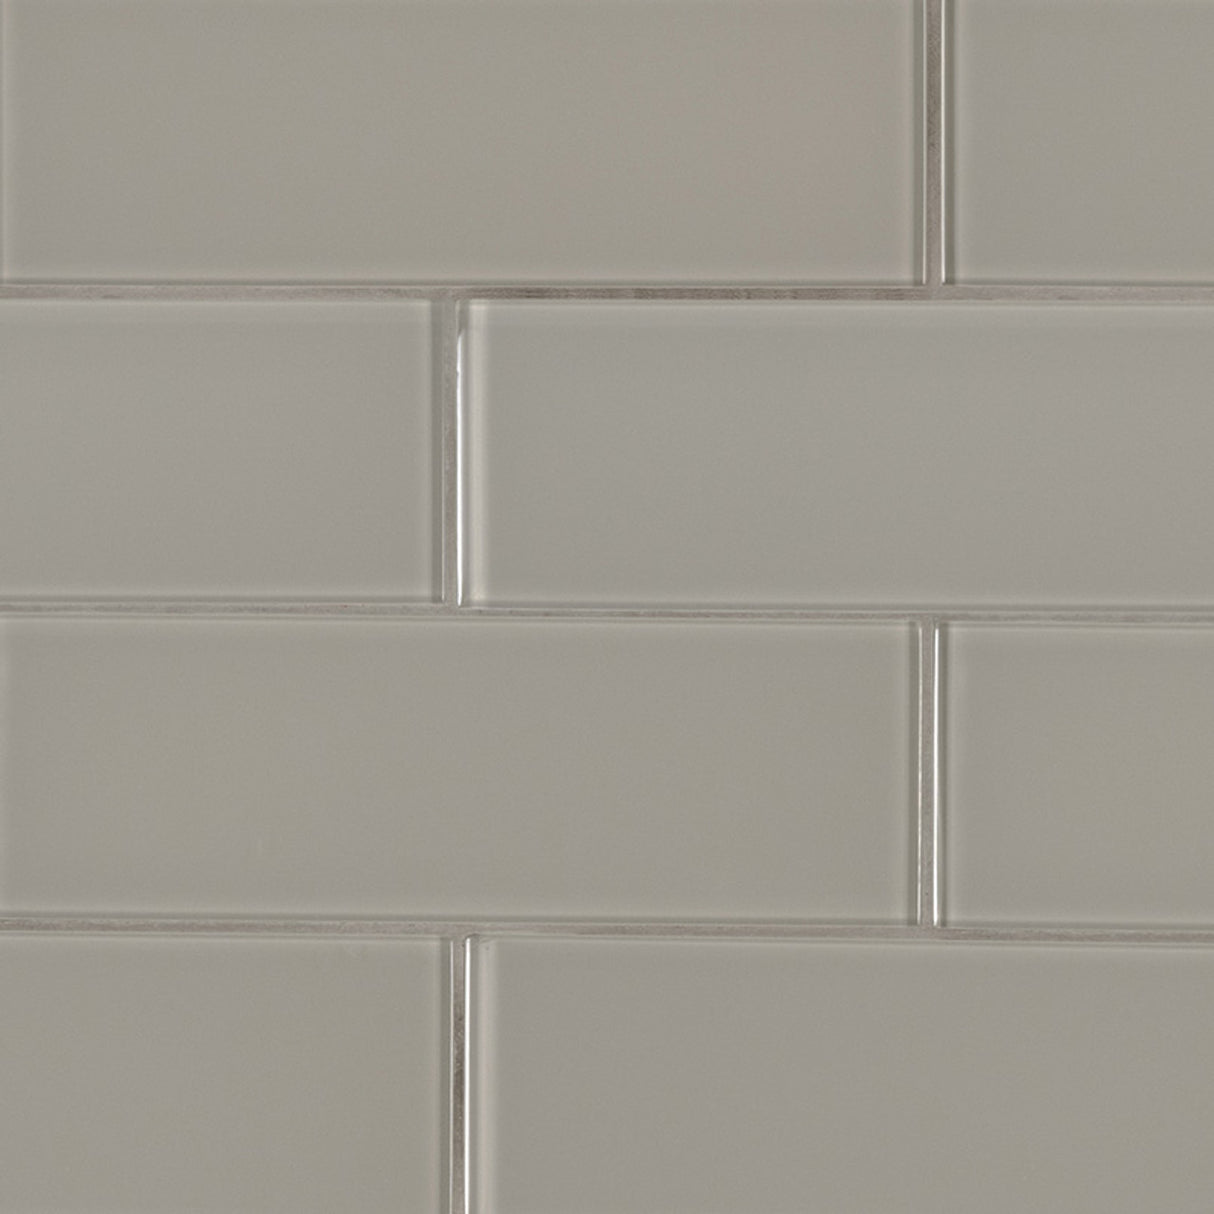 Pebble 3x9 glossy glass gray subway tile SMOT GL T PEB39 product shot angle view #Size_3"x9"